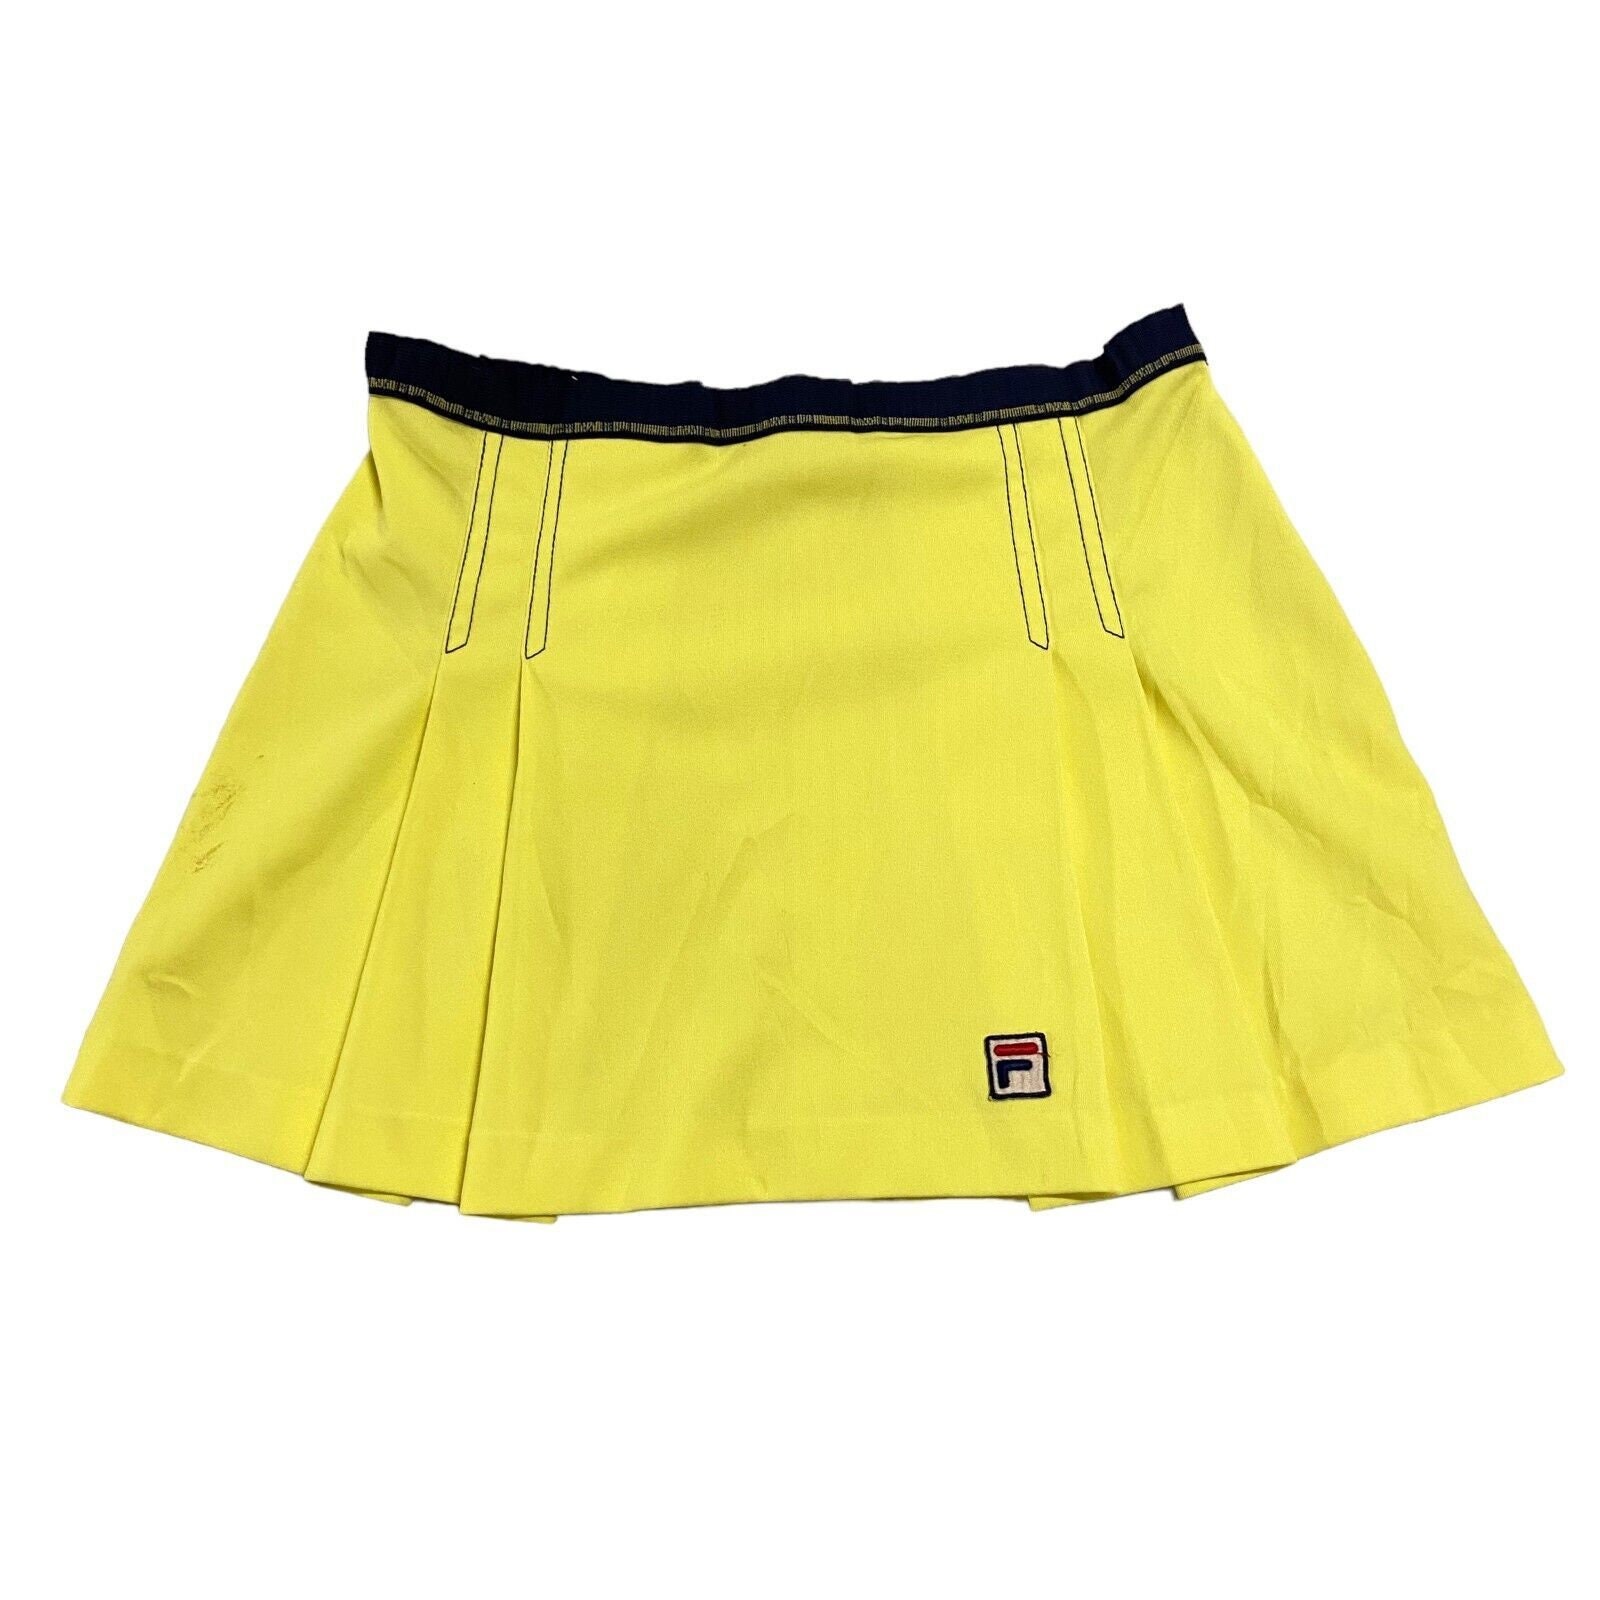 Fila tennis skirt